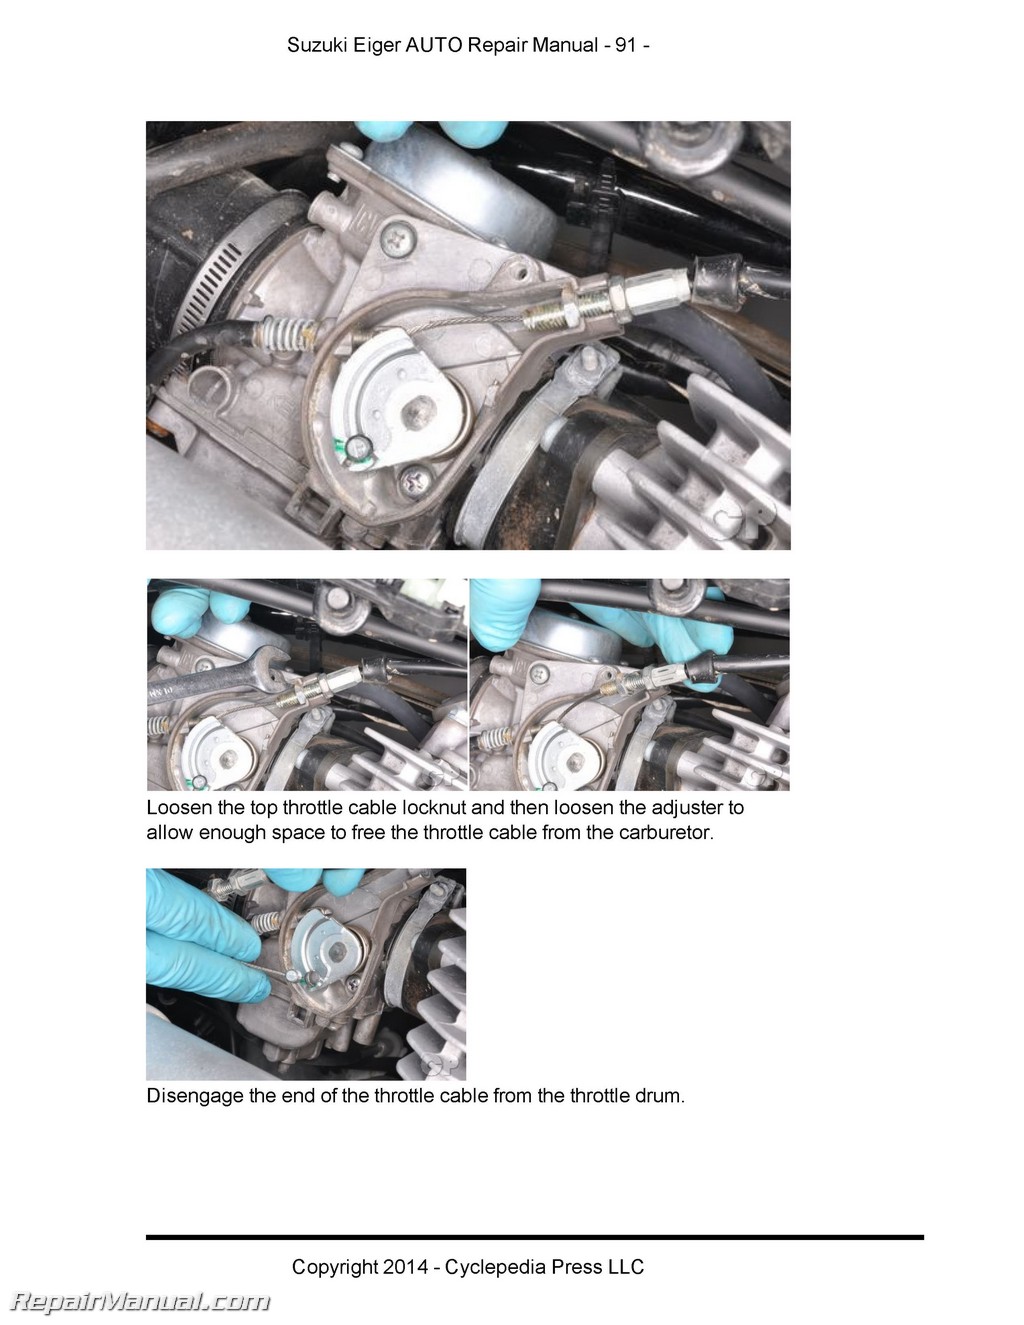 2002-2007 Suzuki Eiger 400 Service Repair manual on CD FREE SHIPPING 